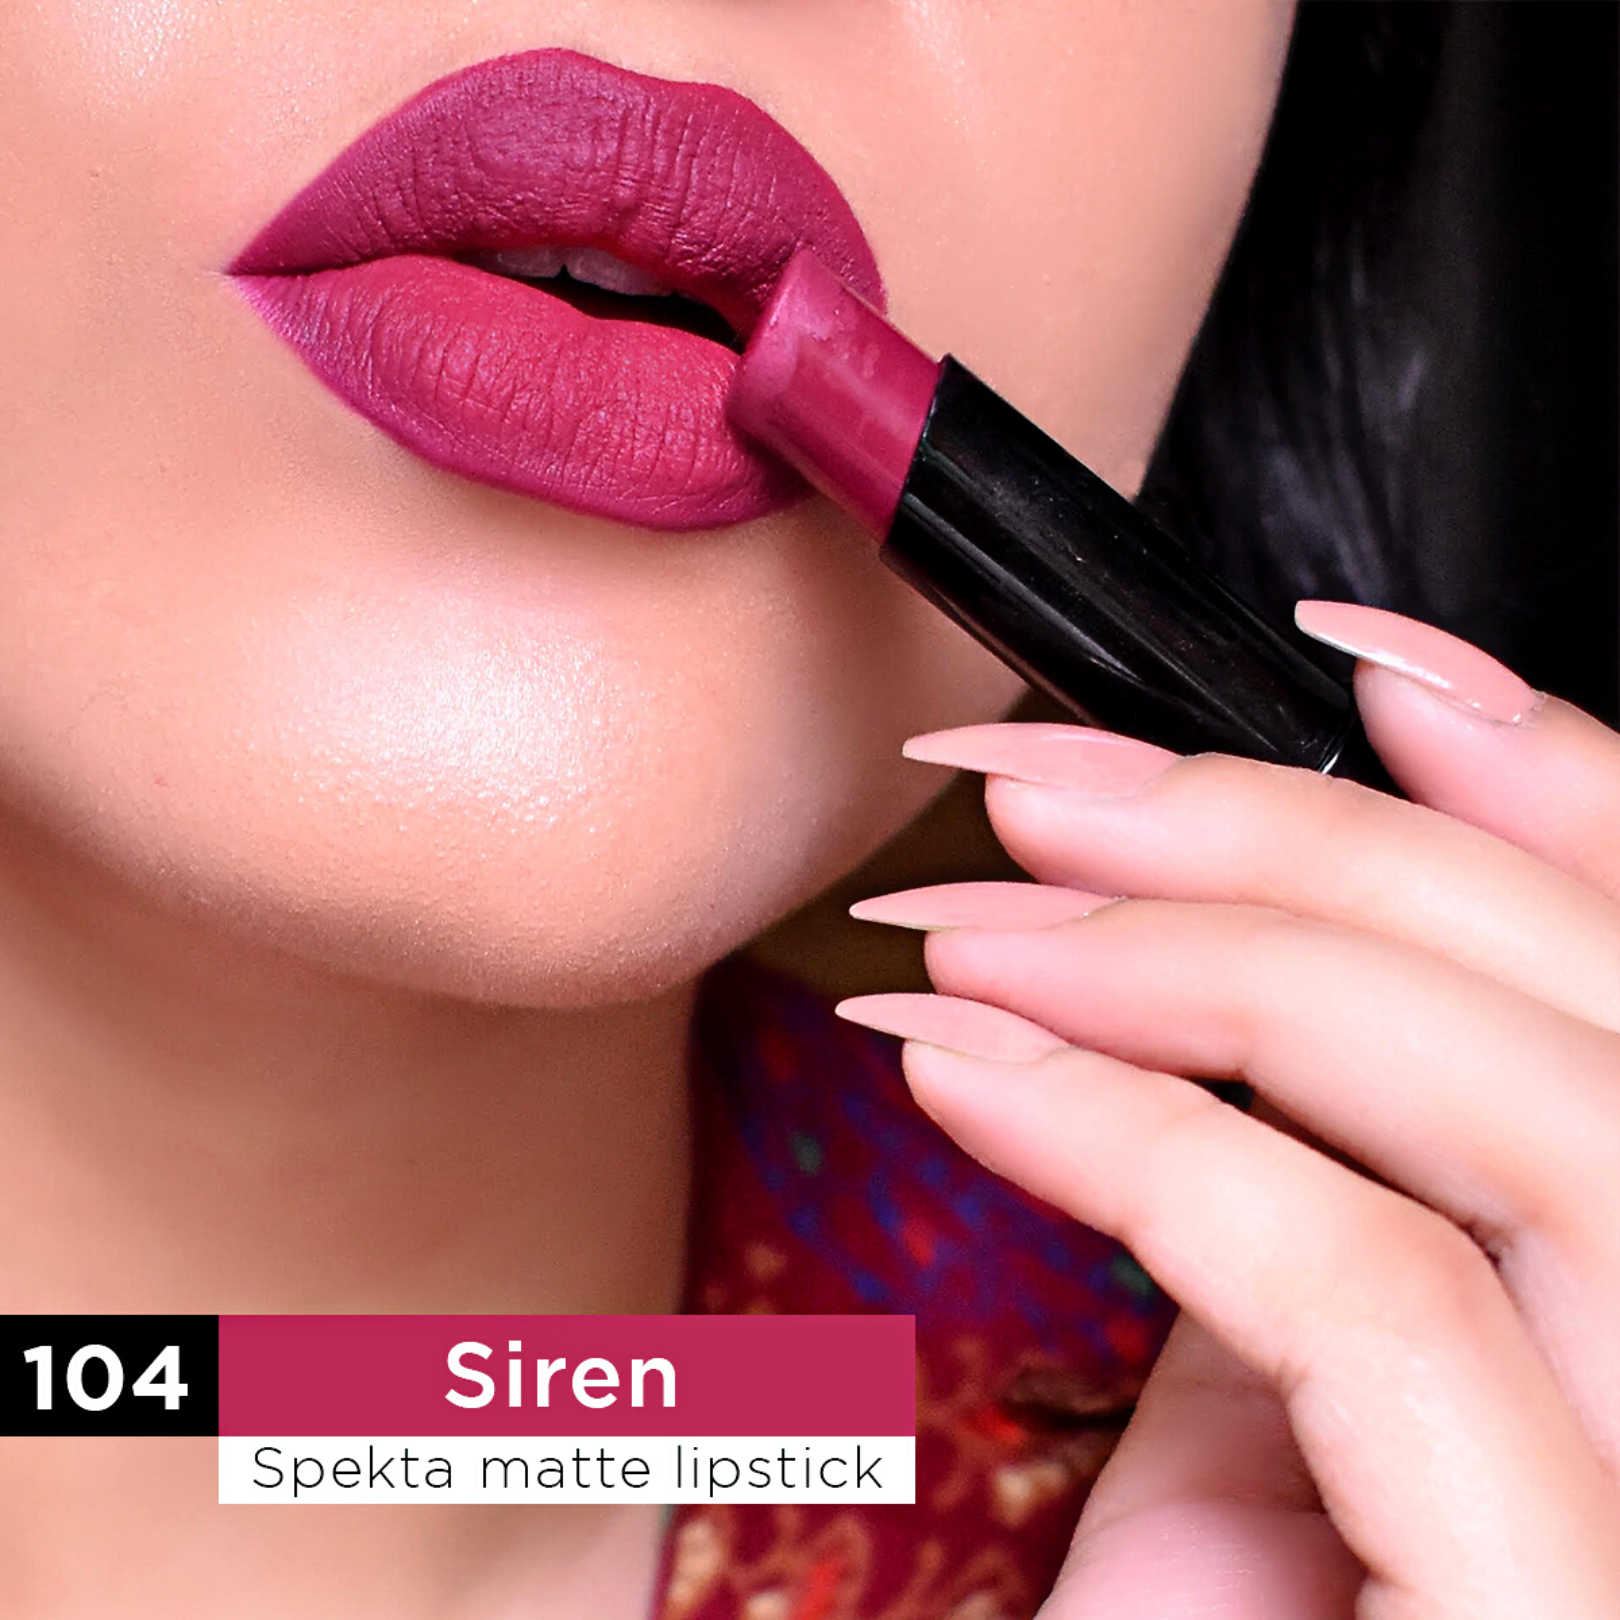 Spekta True Matte Lipstick- 104 Siren (3.7g, Reddish-plum)